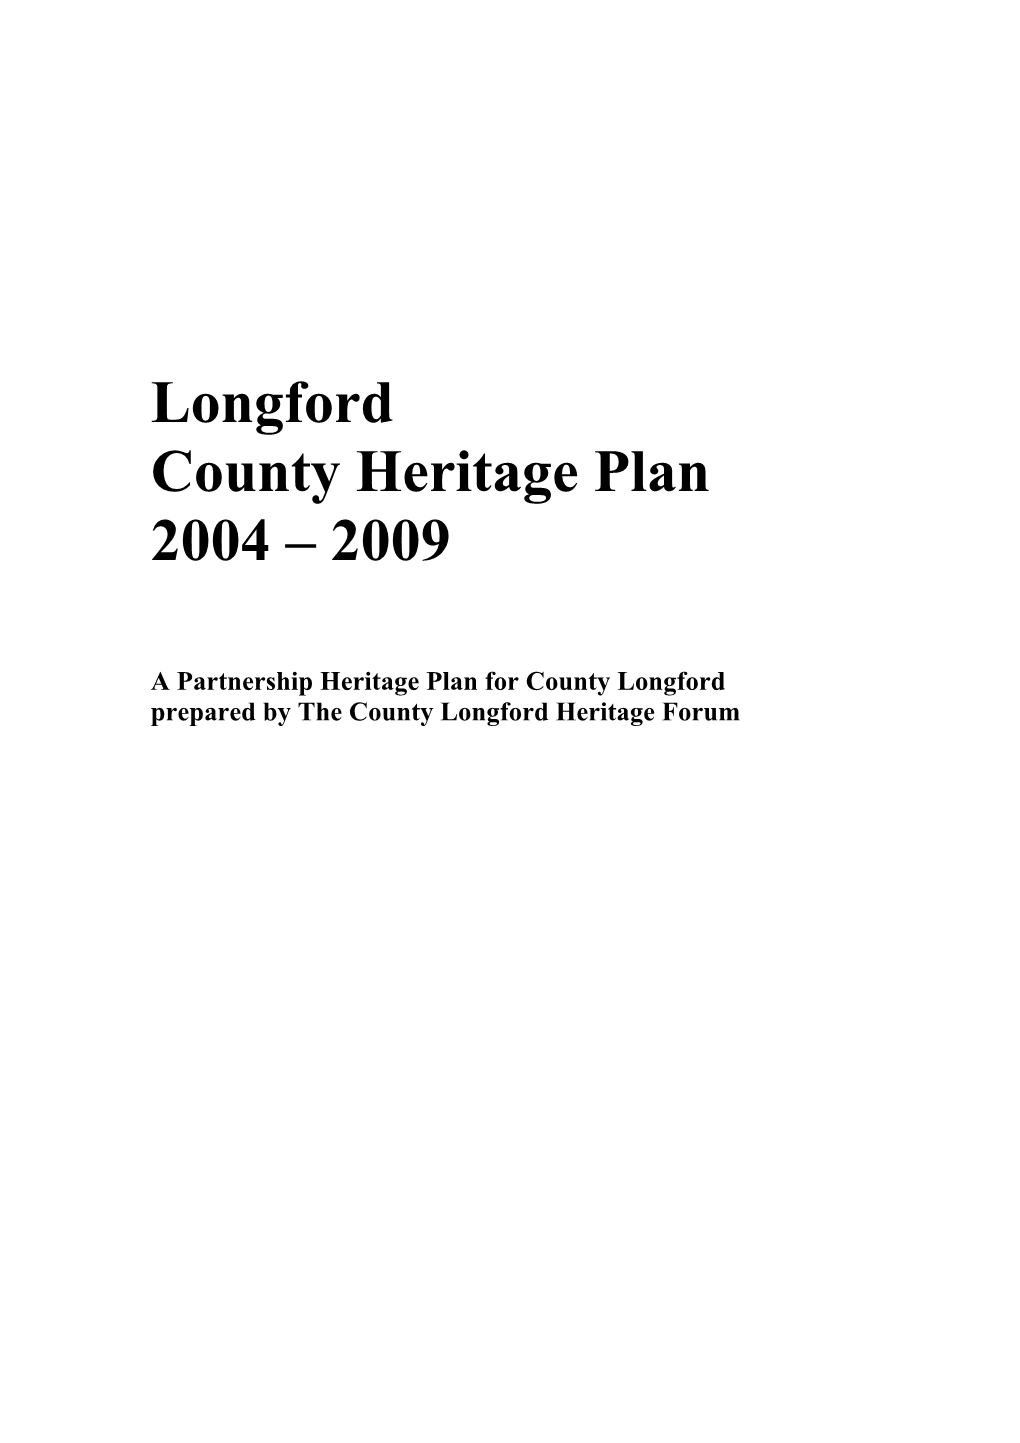 Longford County Heritage Plan 2004 – 2009